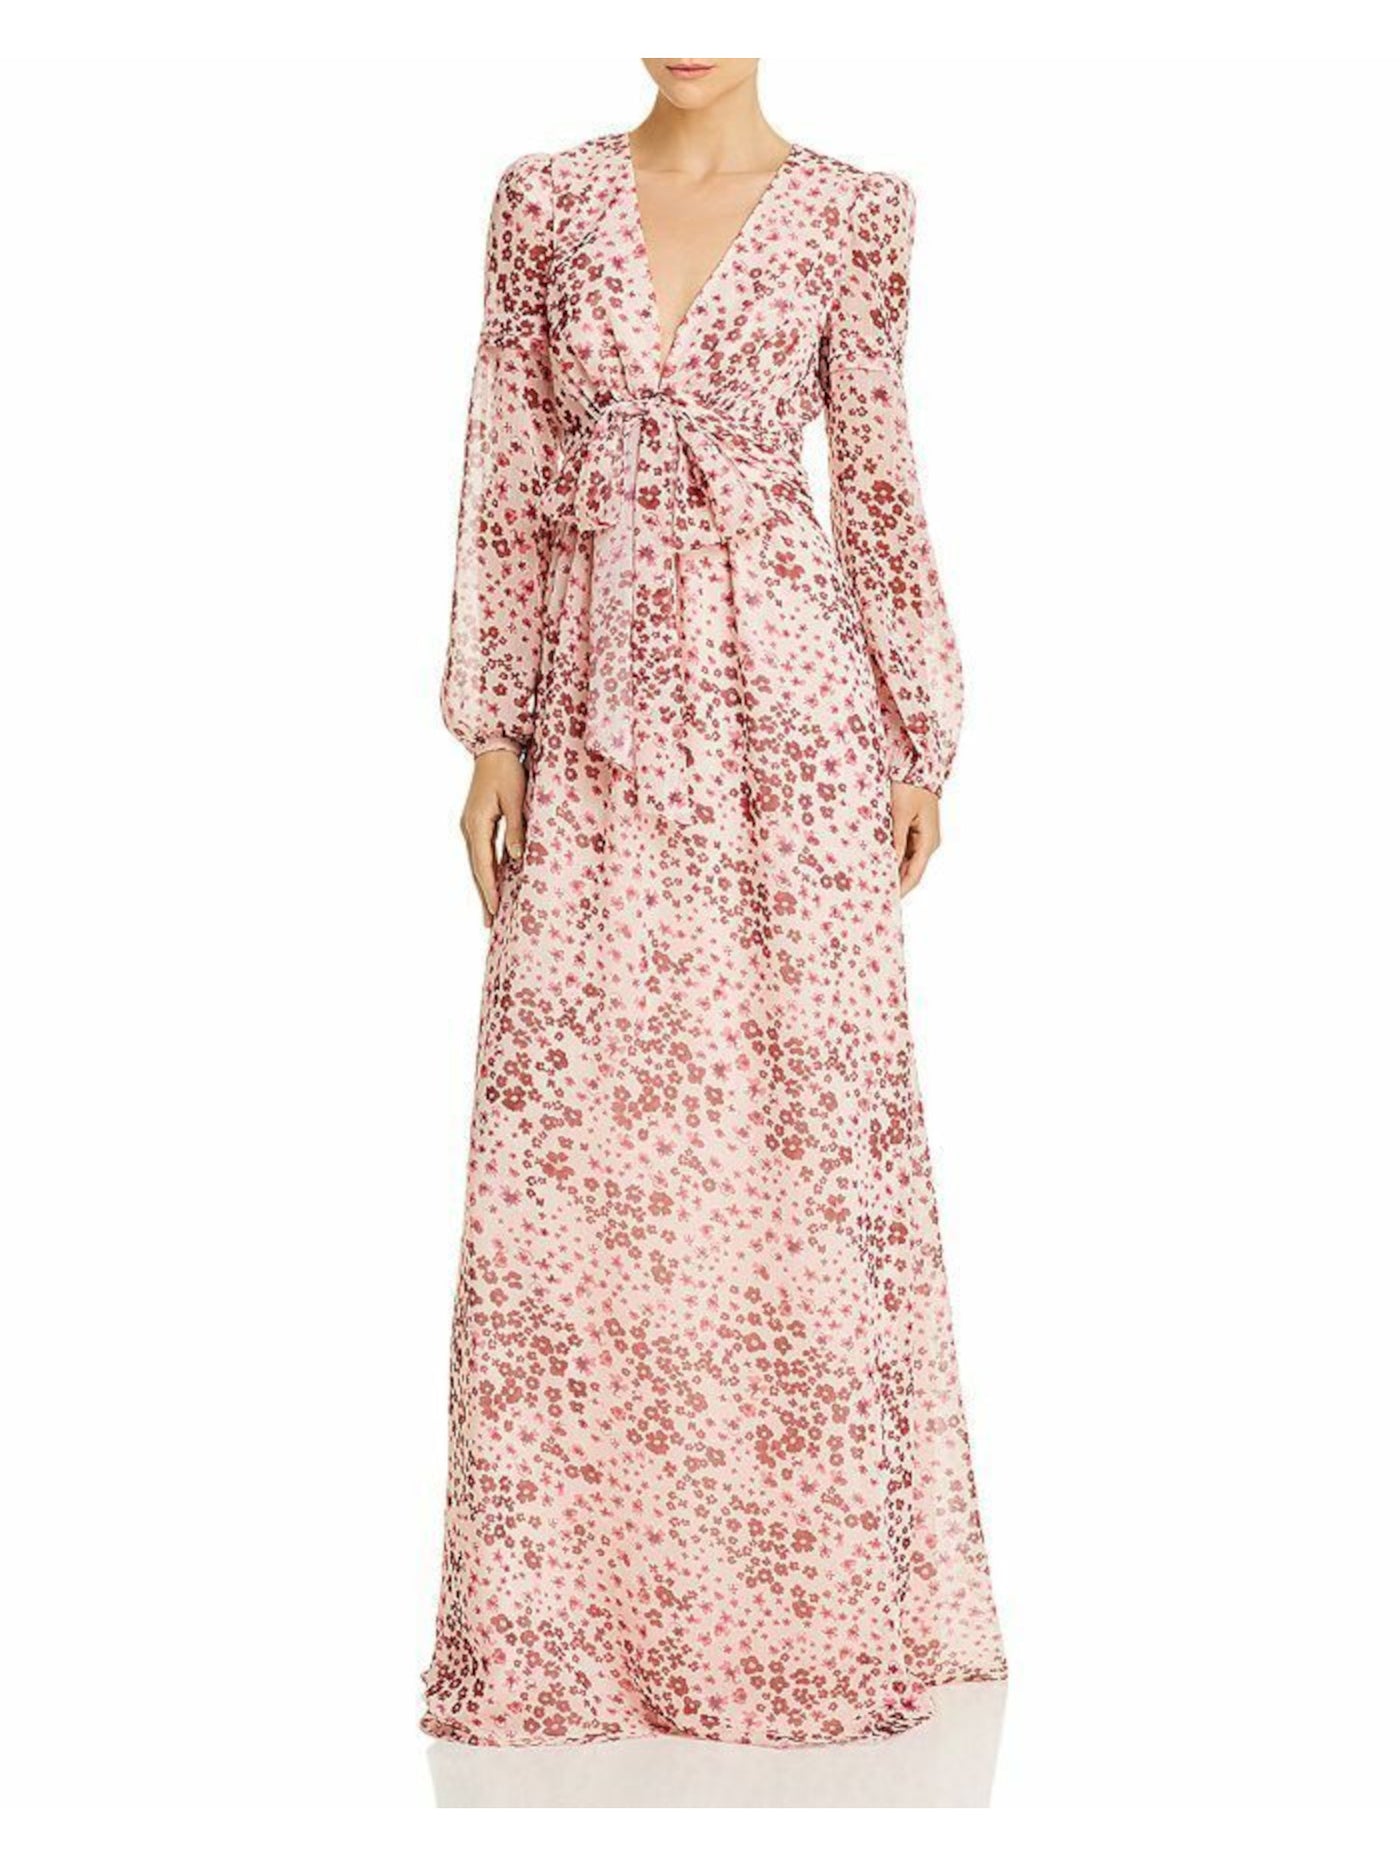 RACHEL ZOE Womens Pink Floral Long Sleeve V Neck Full-Length Evening Shift Dress 6